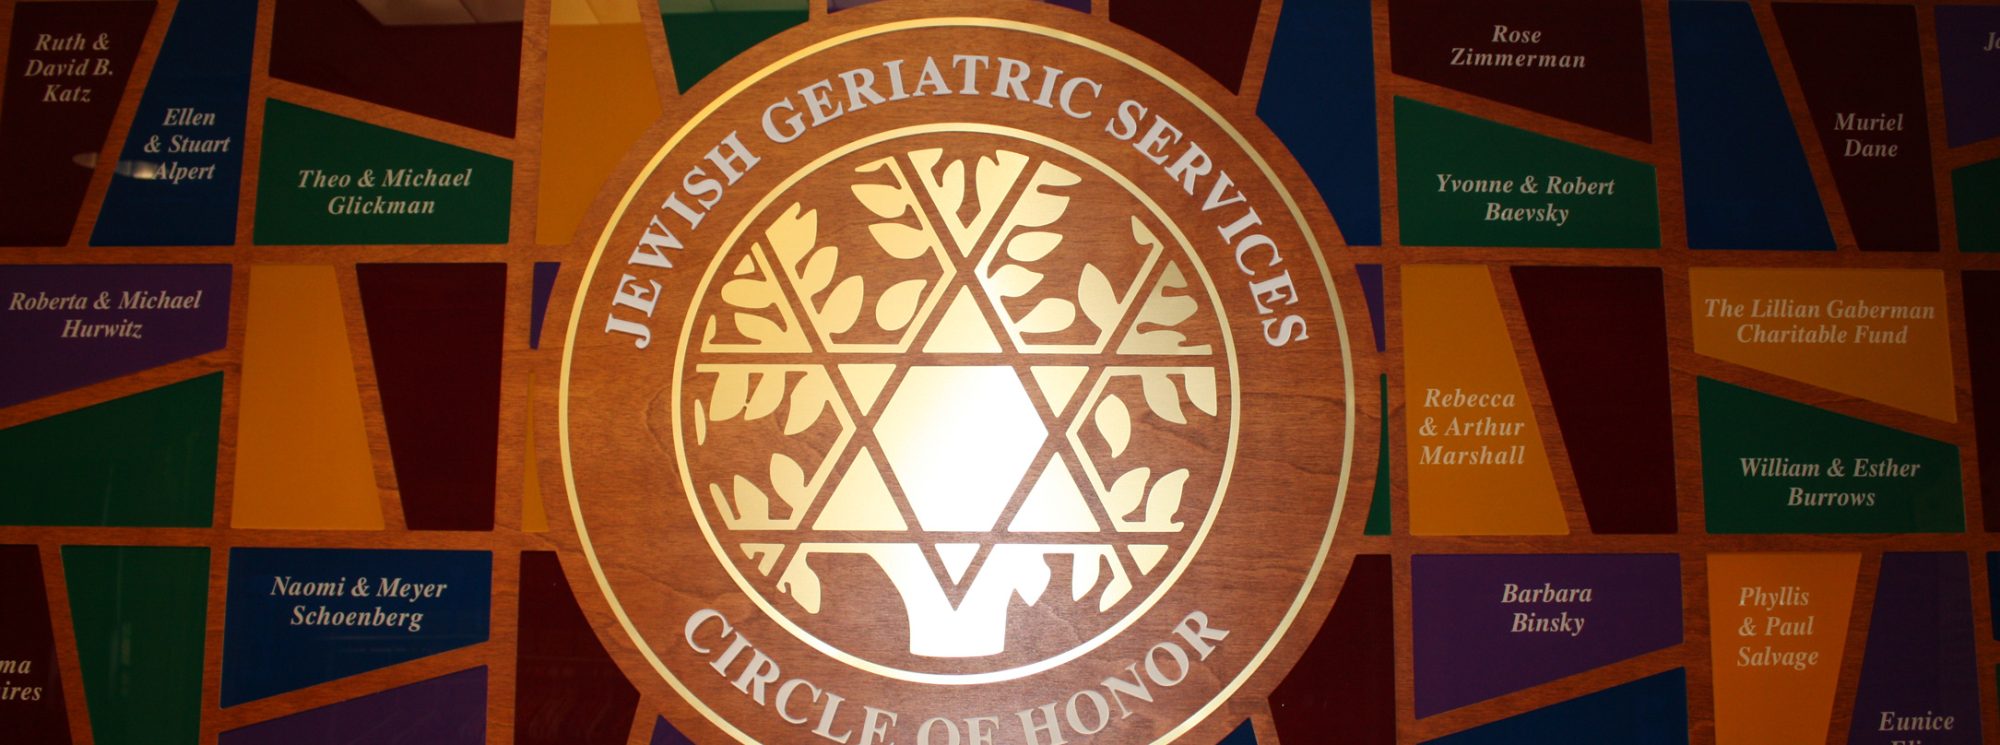 The Circle of Honor decoration at JGS Lifecare